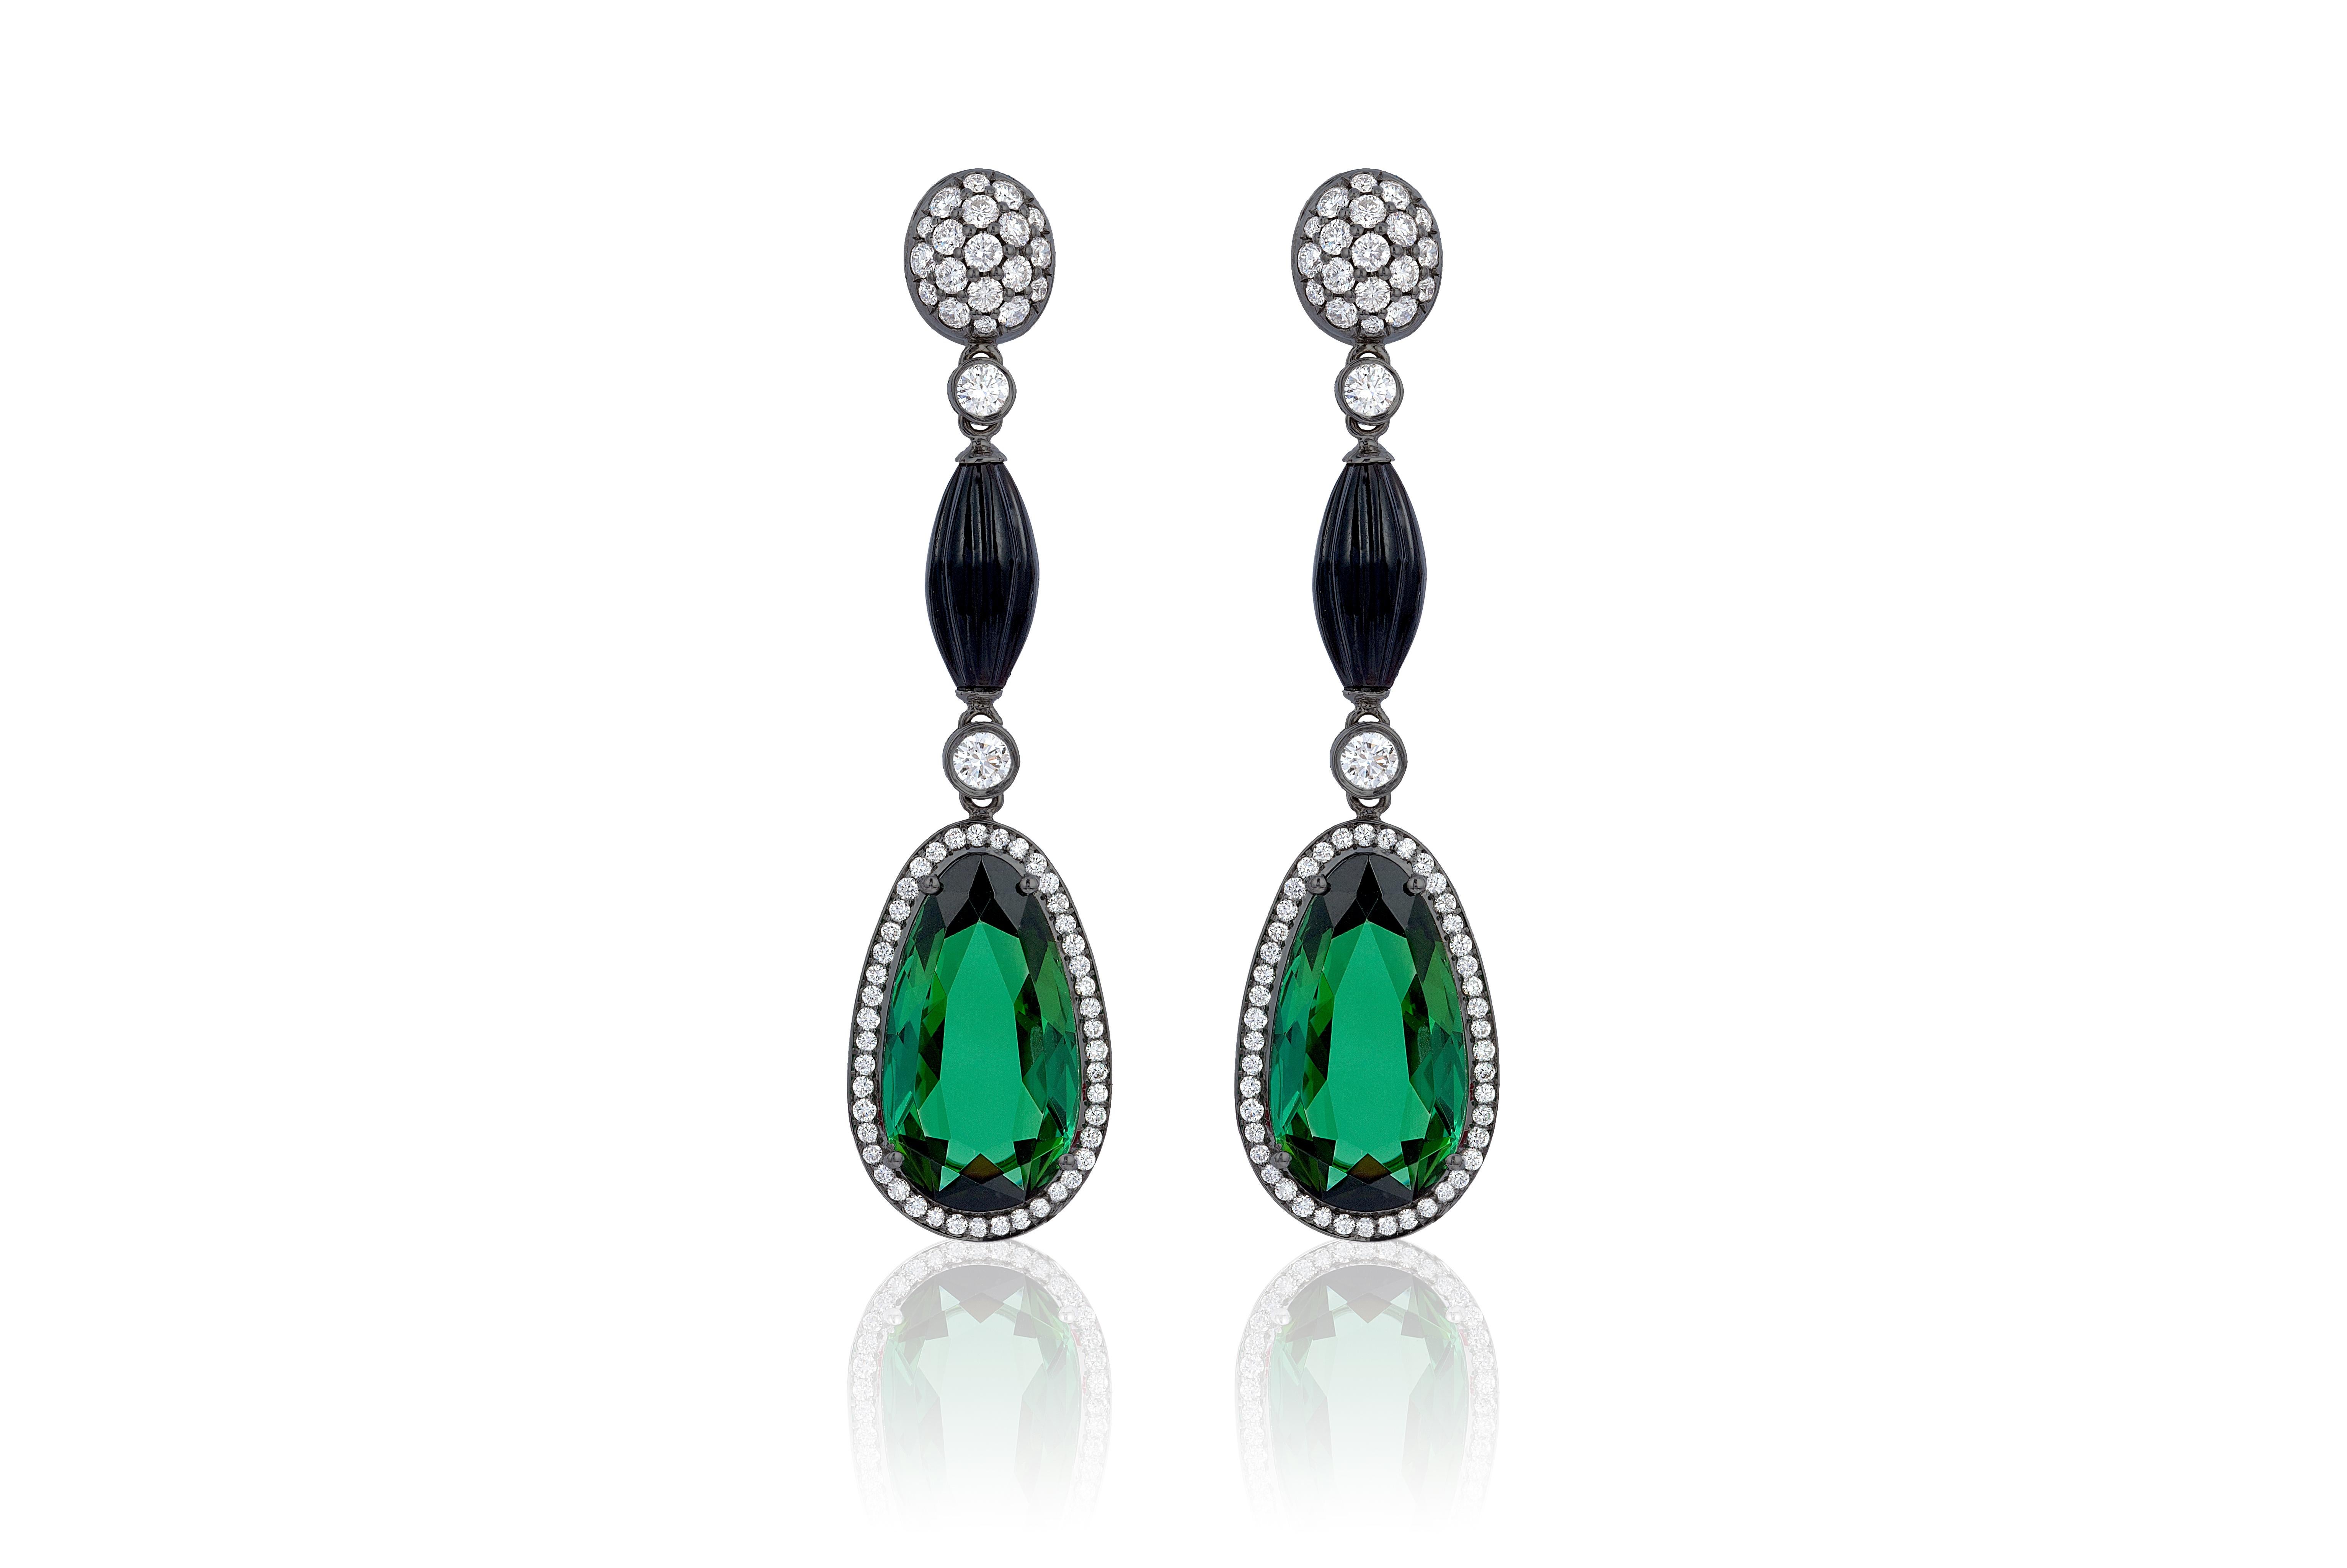 Contemporary Goshwara Pear Shape Green Tourmaline and Diamond Earrings